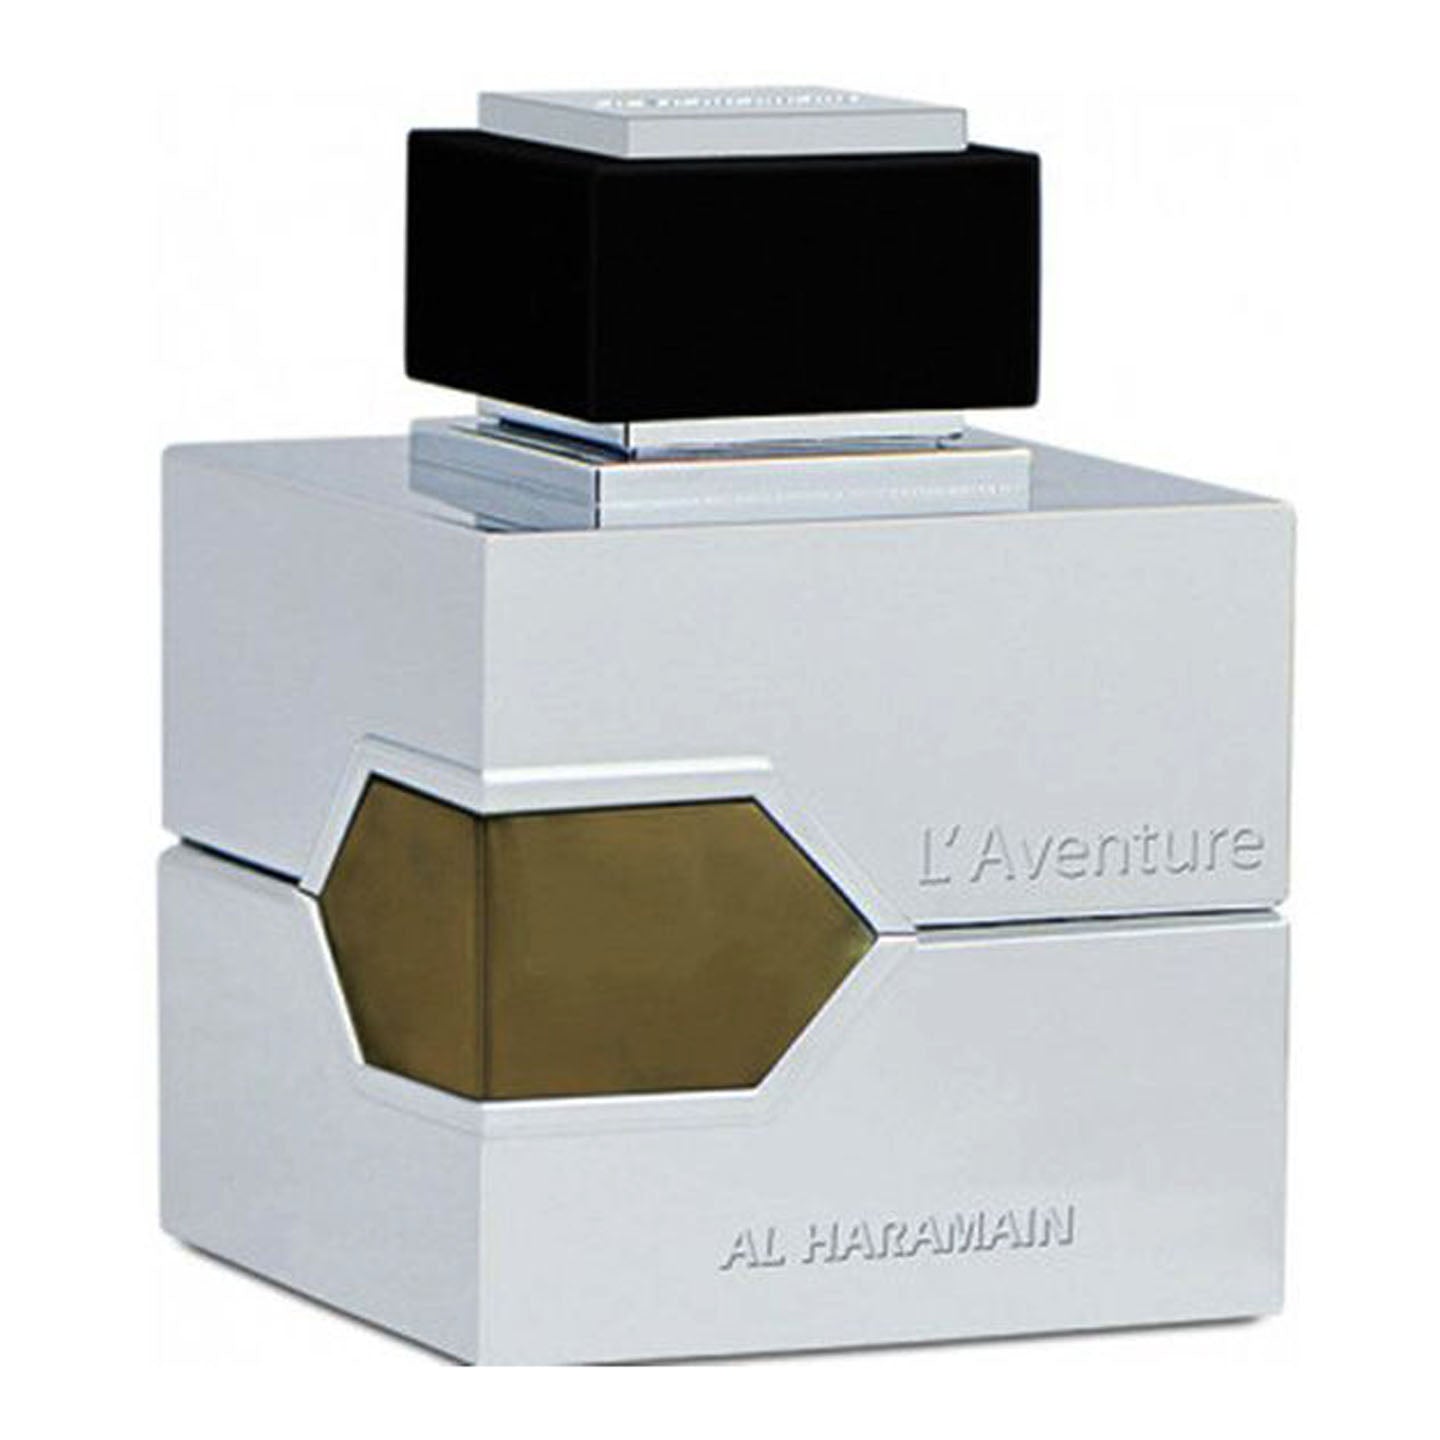 Al Haramain L'Aventure Eau de Parfum Spray 100 ml for Men